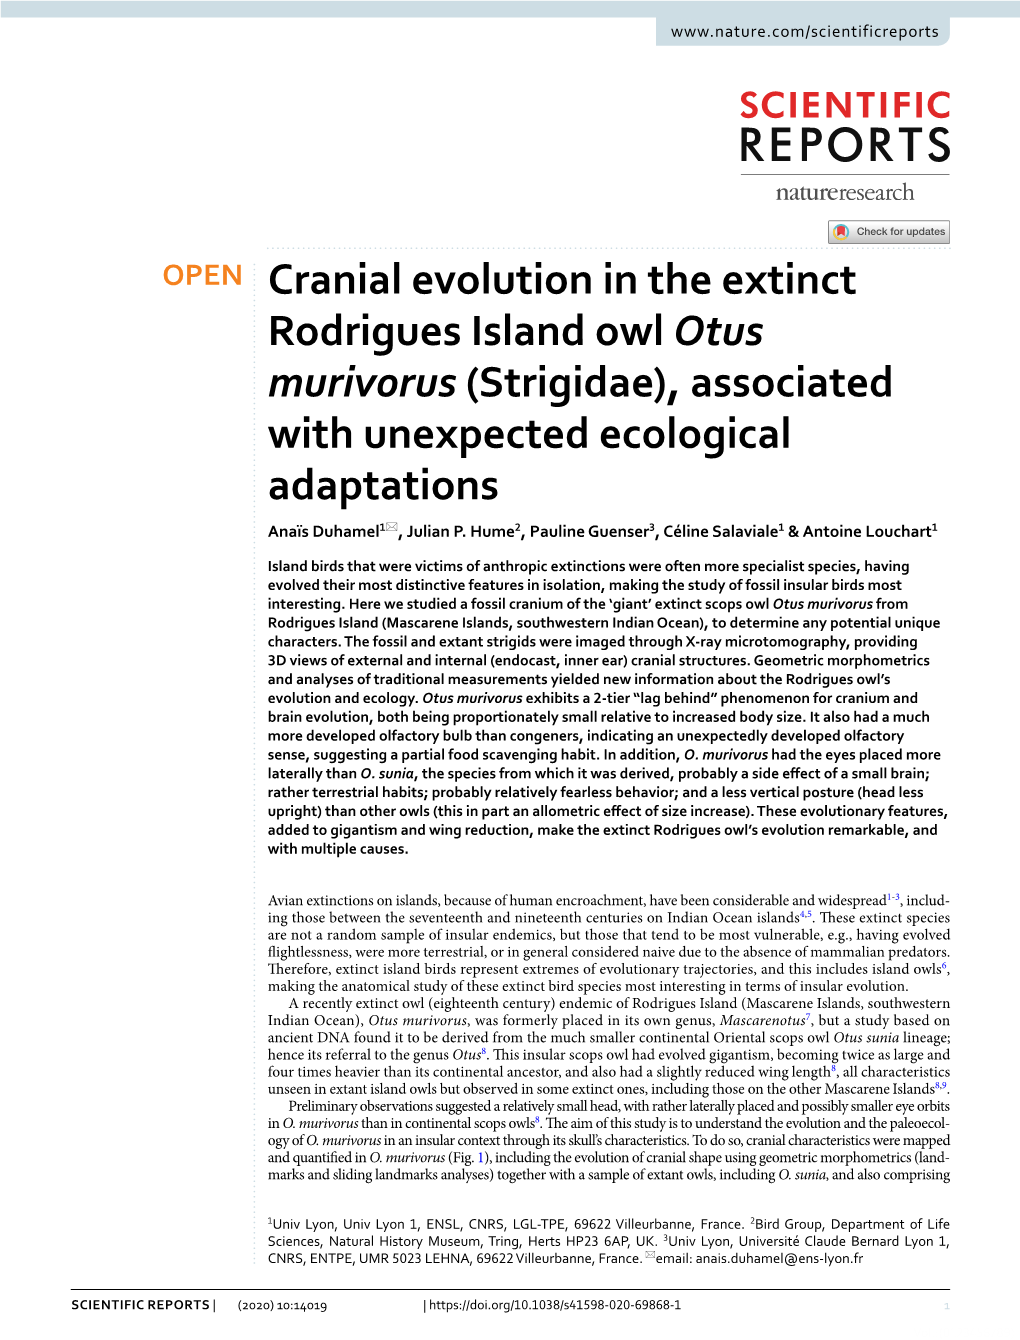 Cranial Evolution in the Extinct Rodrigues Island Owl Otus Murivorus (Strigidae), Associated with Unexpected Ecological Adaptations Anaïs Duhamel1*, Julian P